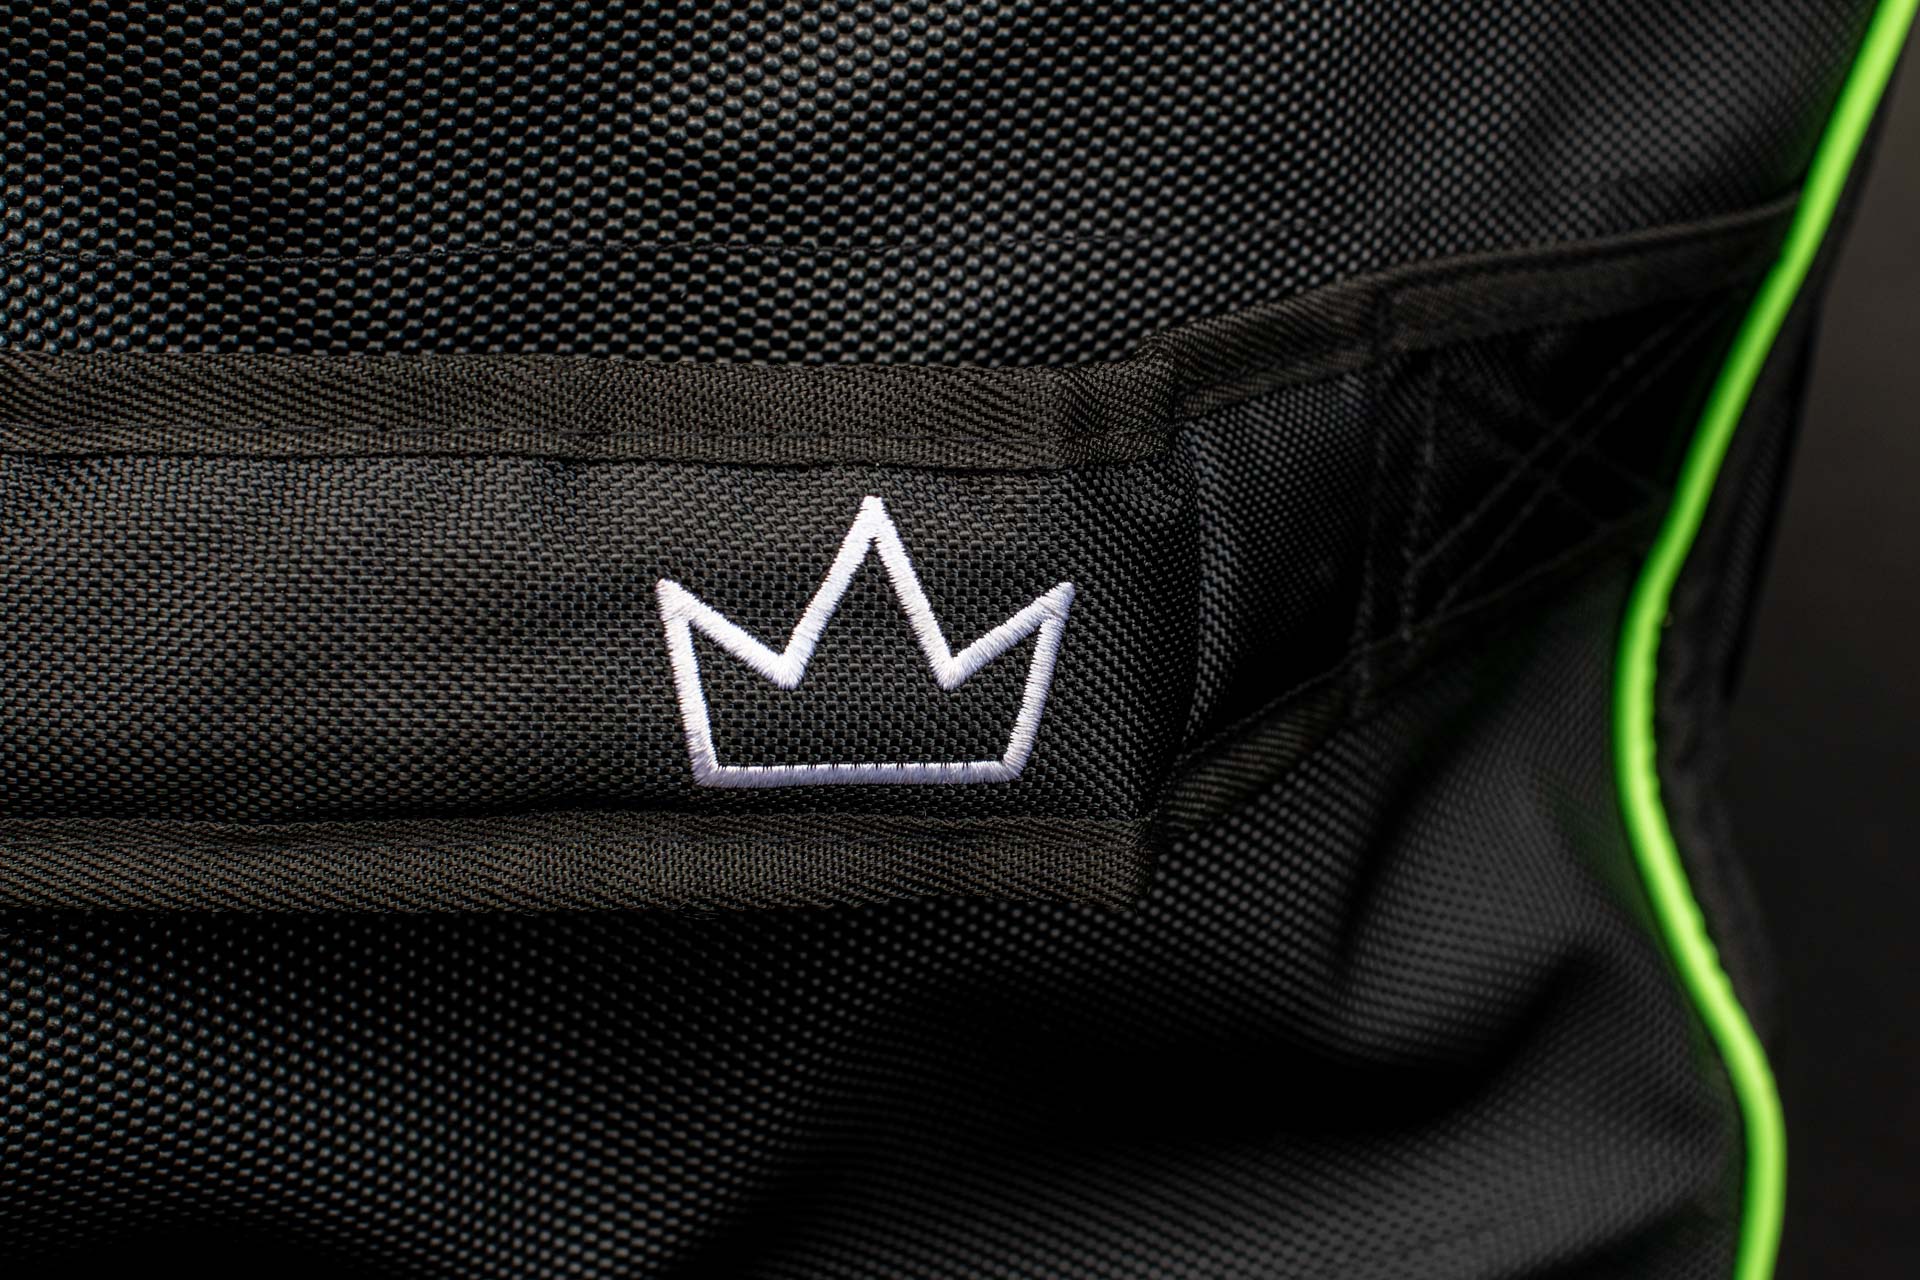 Putt King close up of logo on bag